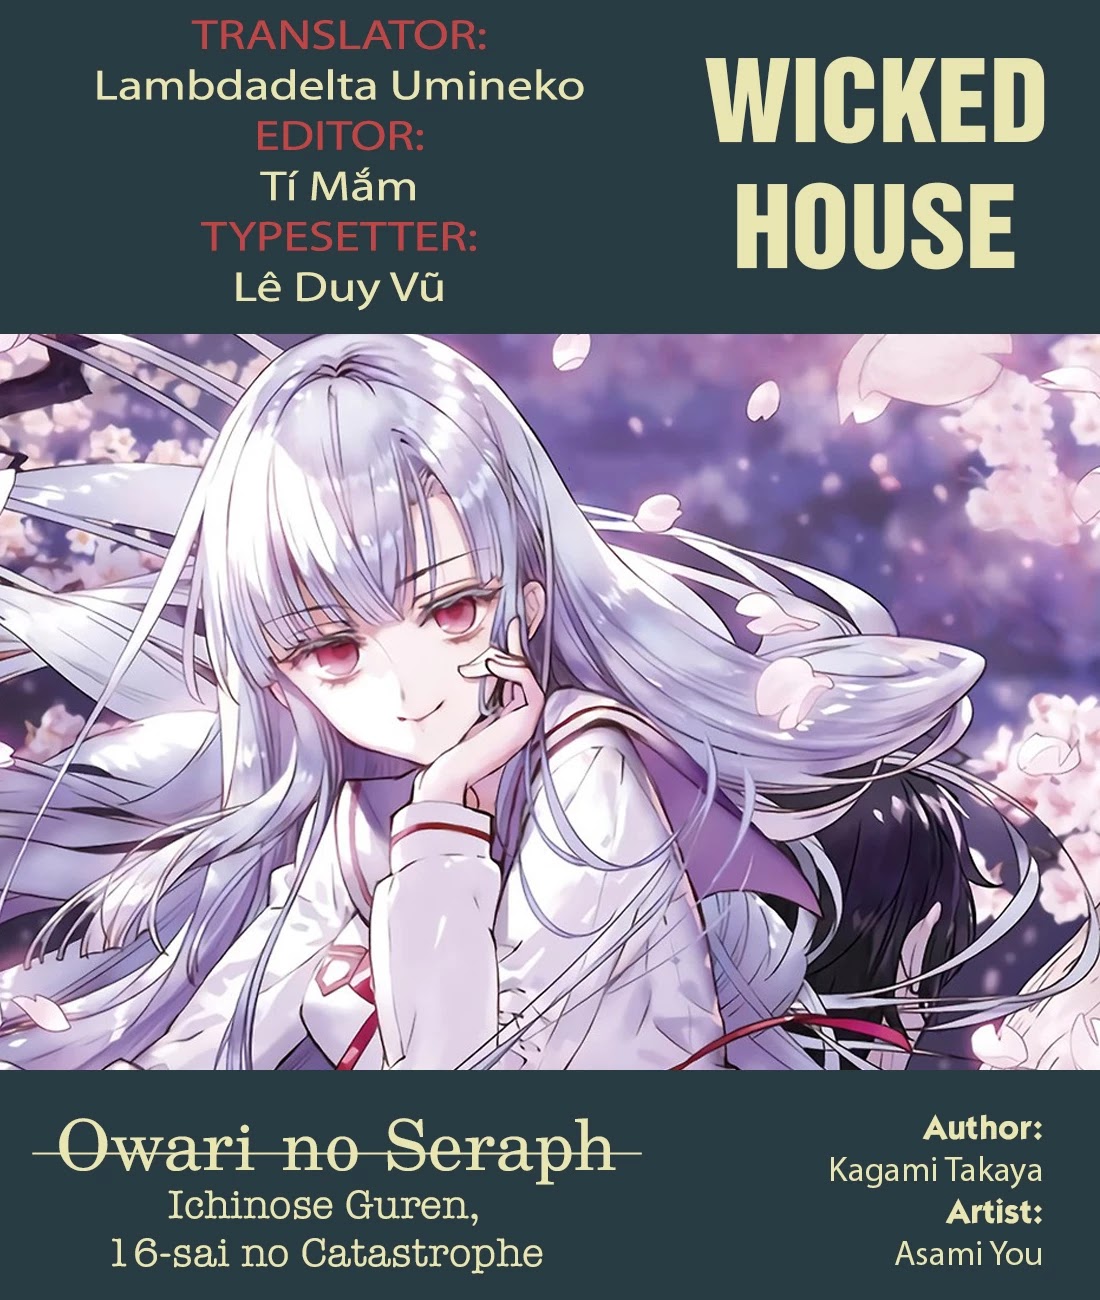 Owari No Seraph: Guren Ichinose's Catastrophe At 16 Chapter 14.5: Omake From Volume 1 To Volume 3 - Picture 1